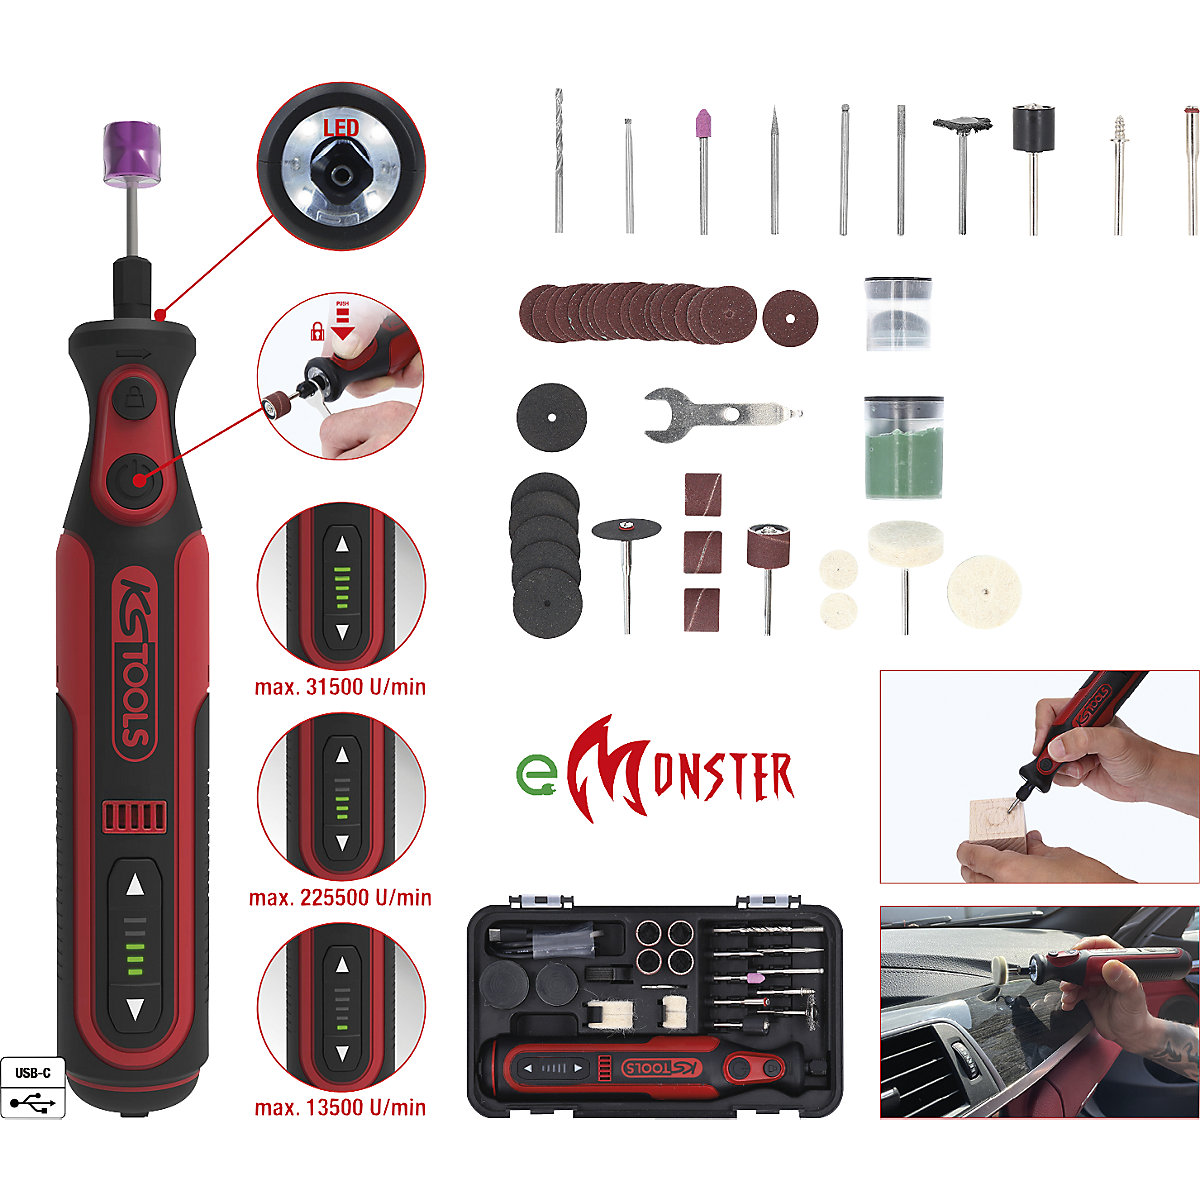 eMONSTER rechargeable multifunction tool set - KS Tools